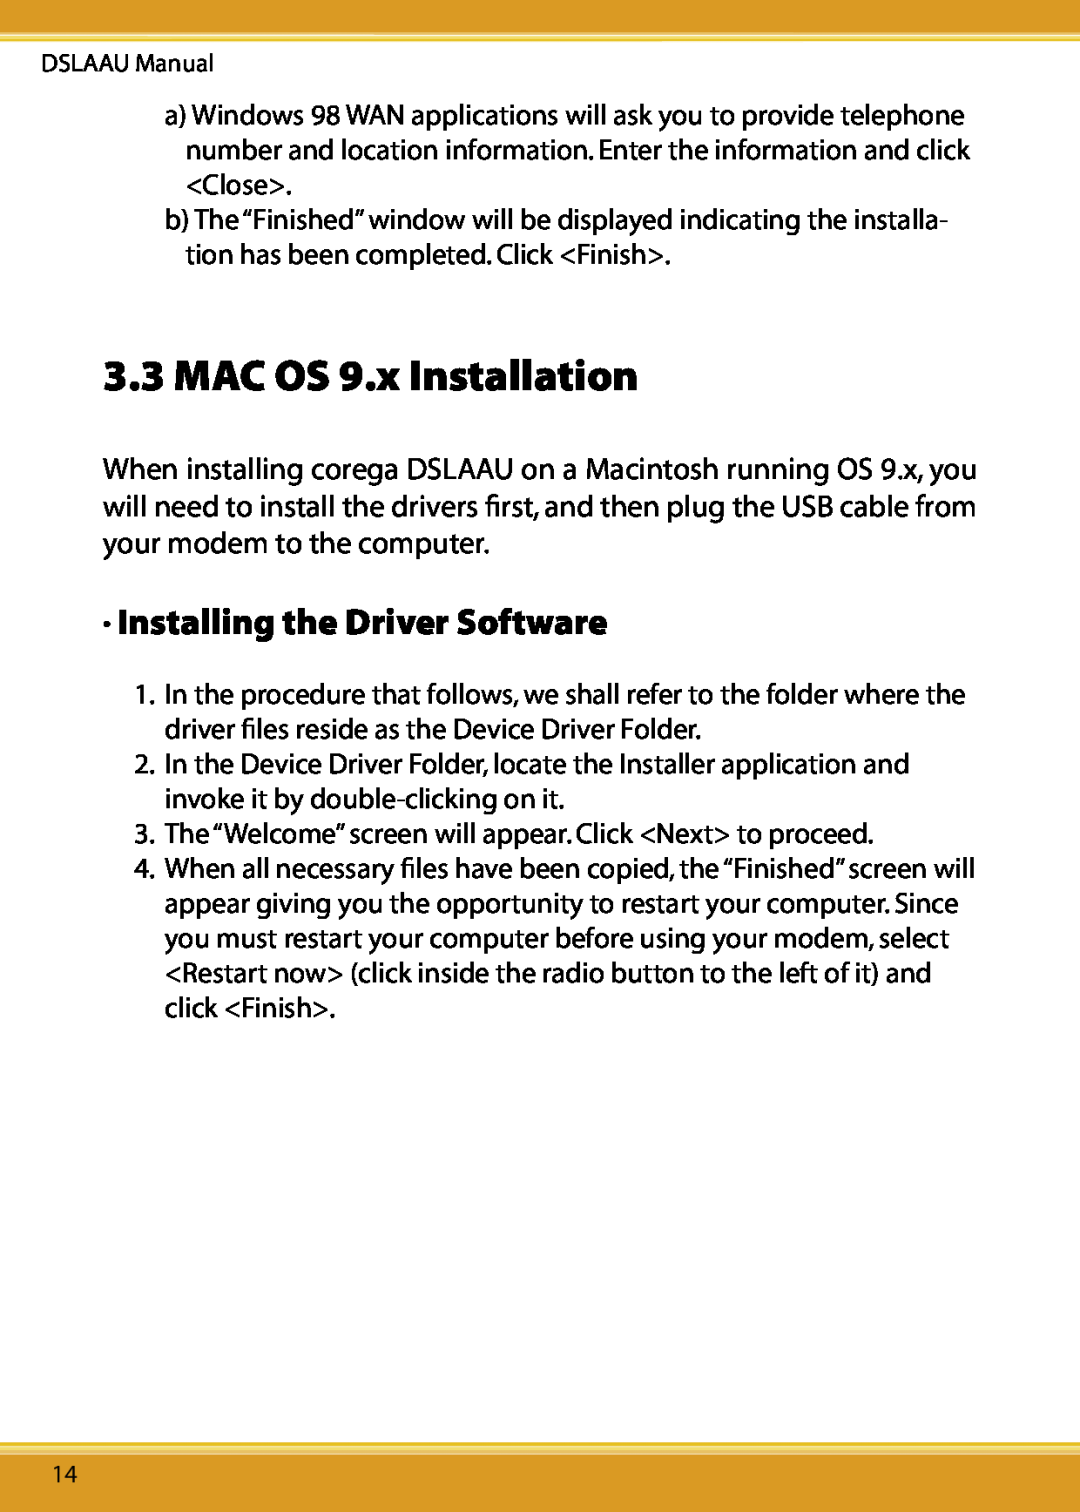 Corega DSLAAU user manual MAC OS 9.x Installation, Installing the Driver Software 